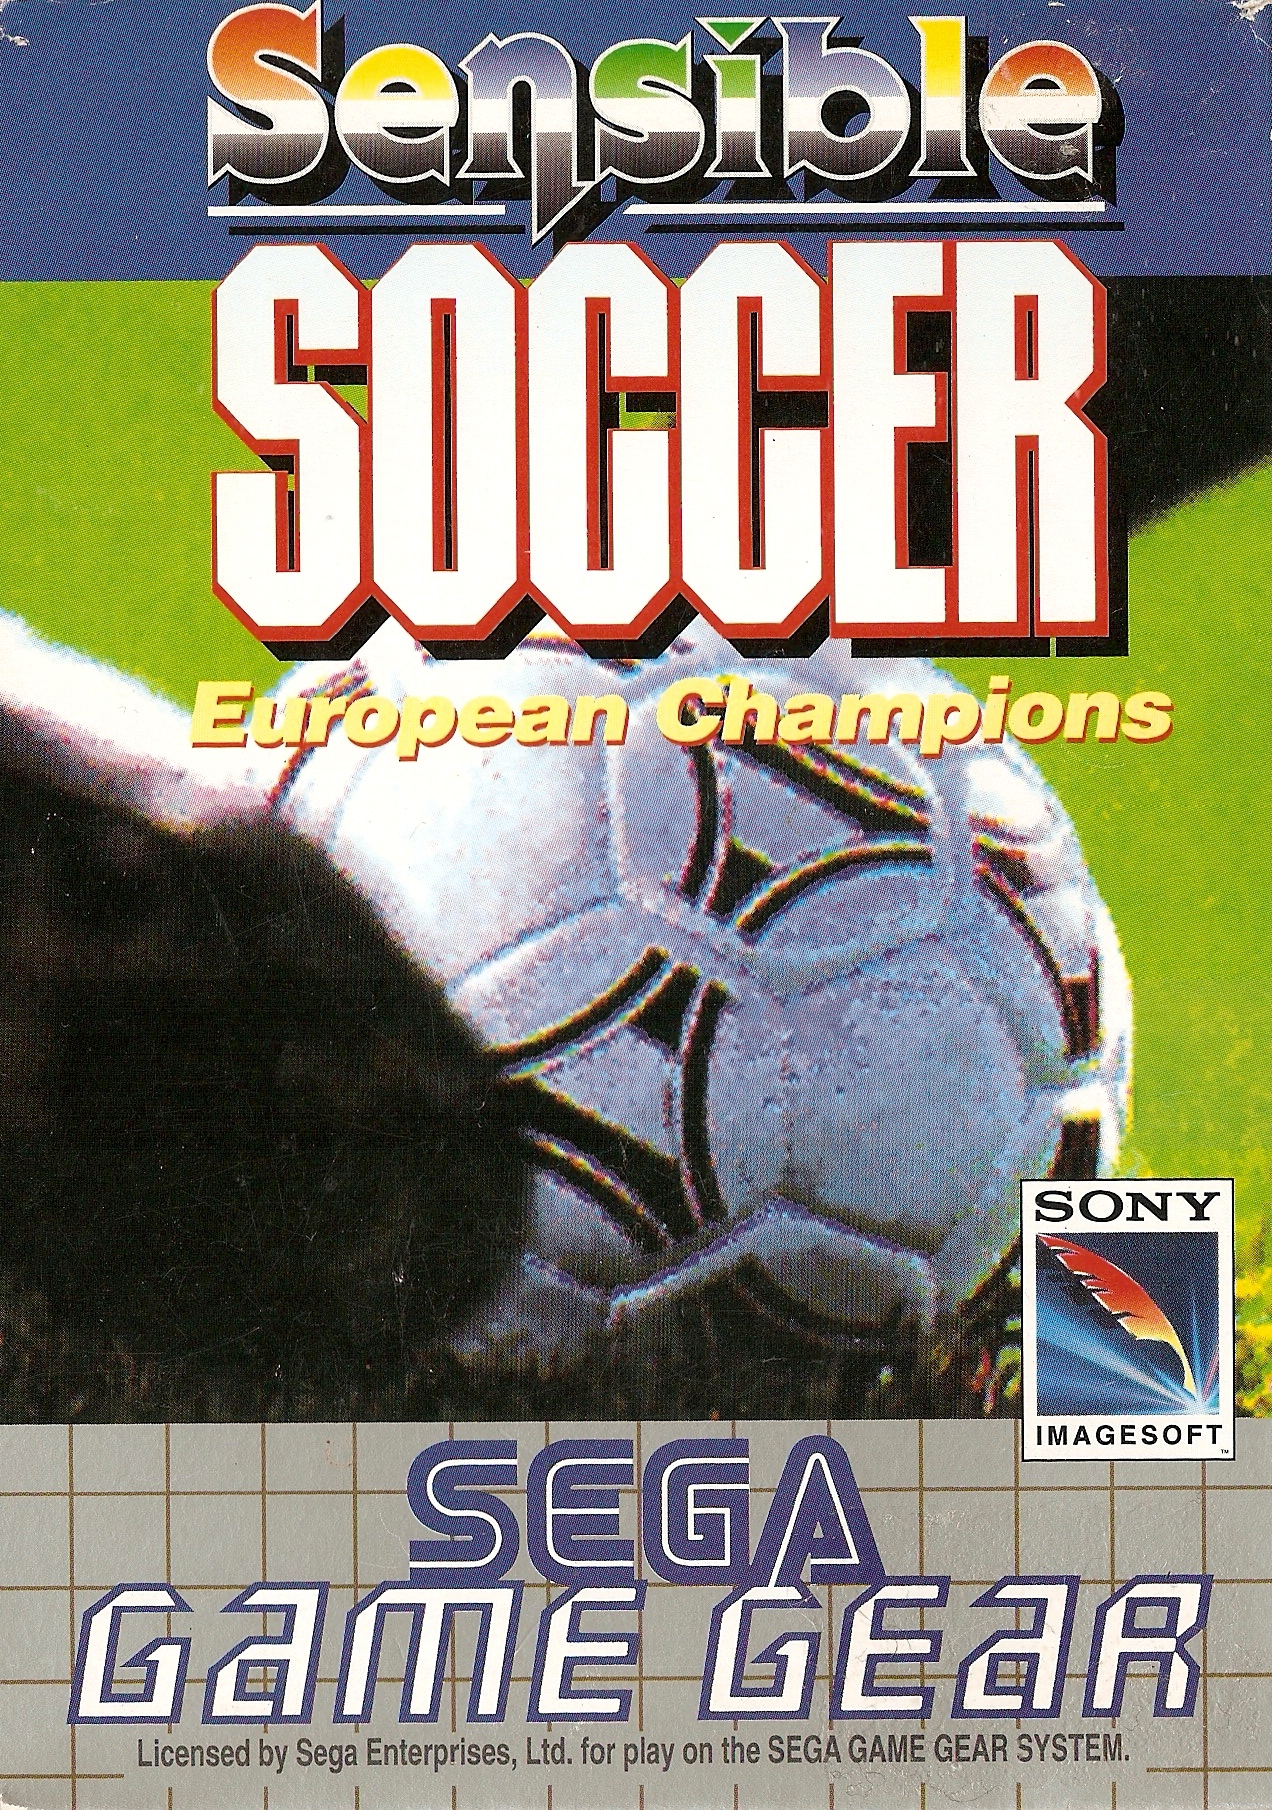 Футбол на сега. Sensible Soccer Sega. Sensible Soccer: European Champions Sega. Championship Pro-am Sega. Game gg eu.